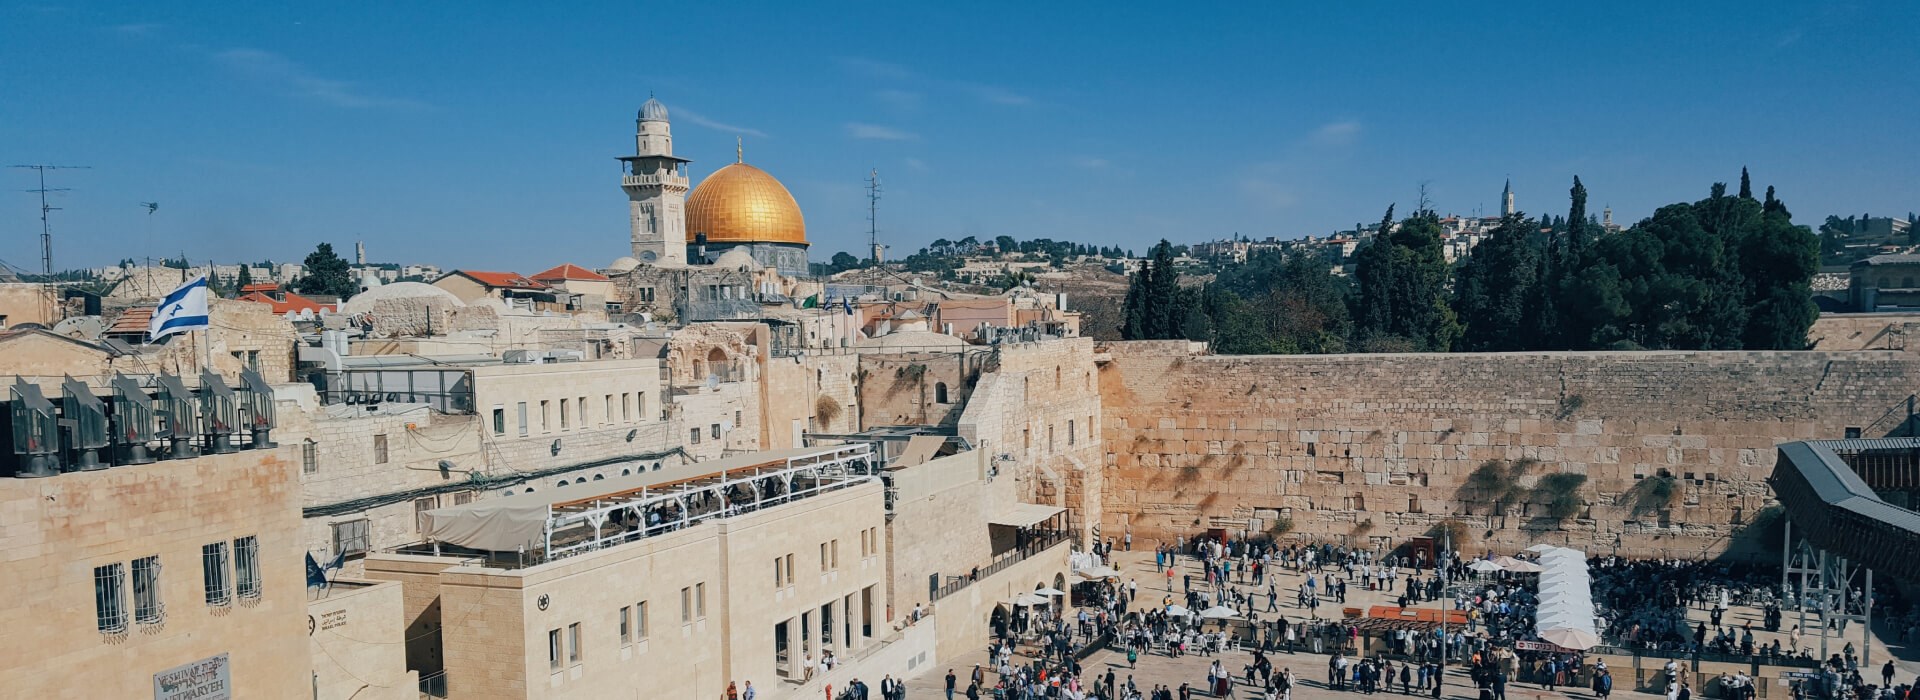 Jerusalem Gates Hotel - Attractions in Jerusalem 